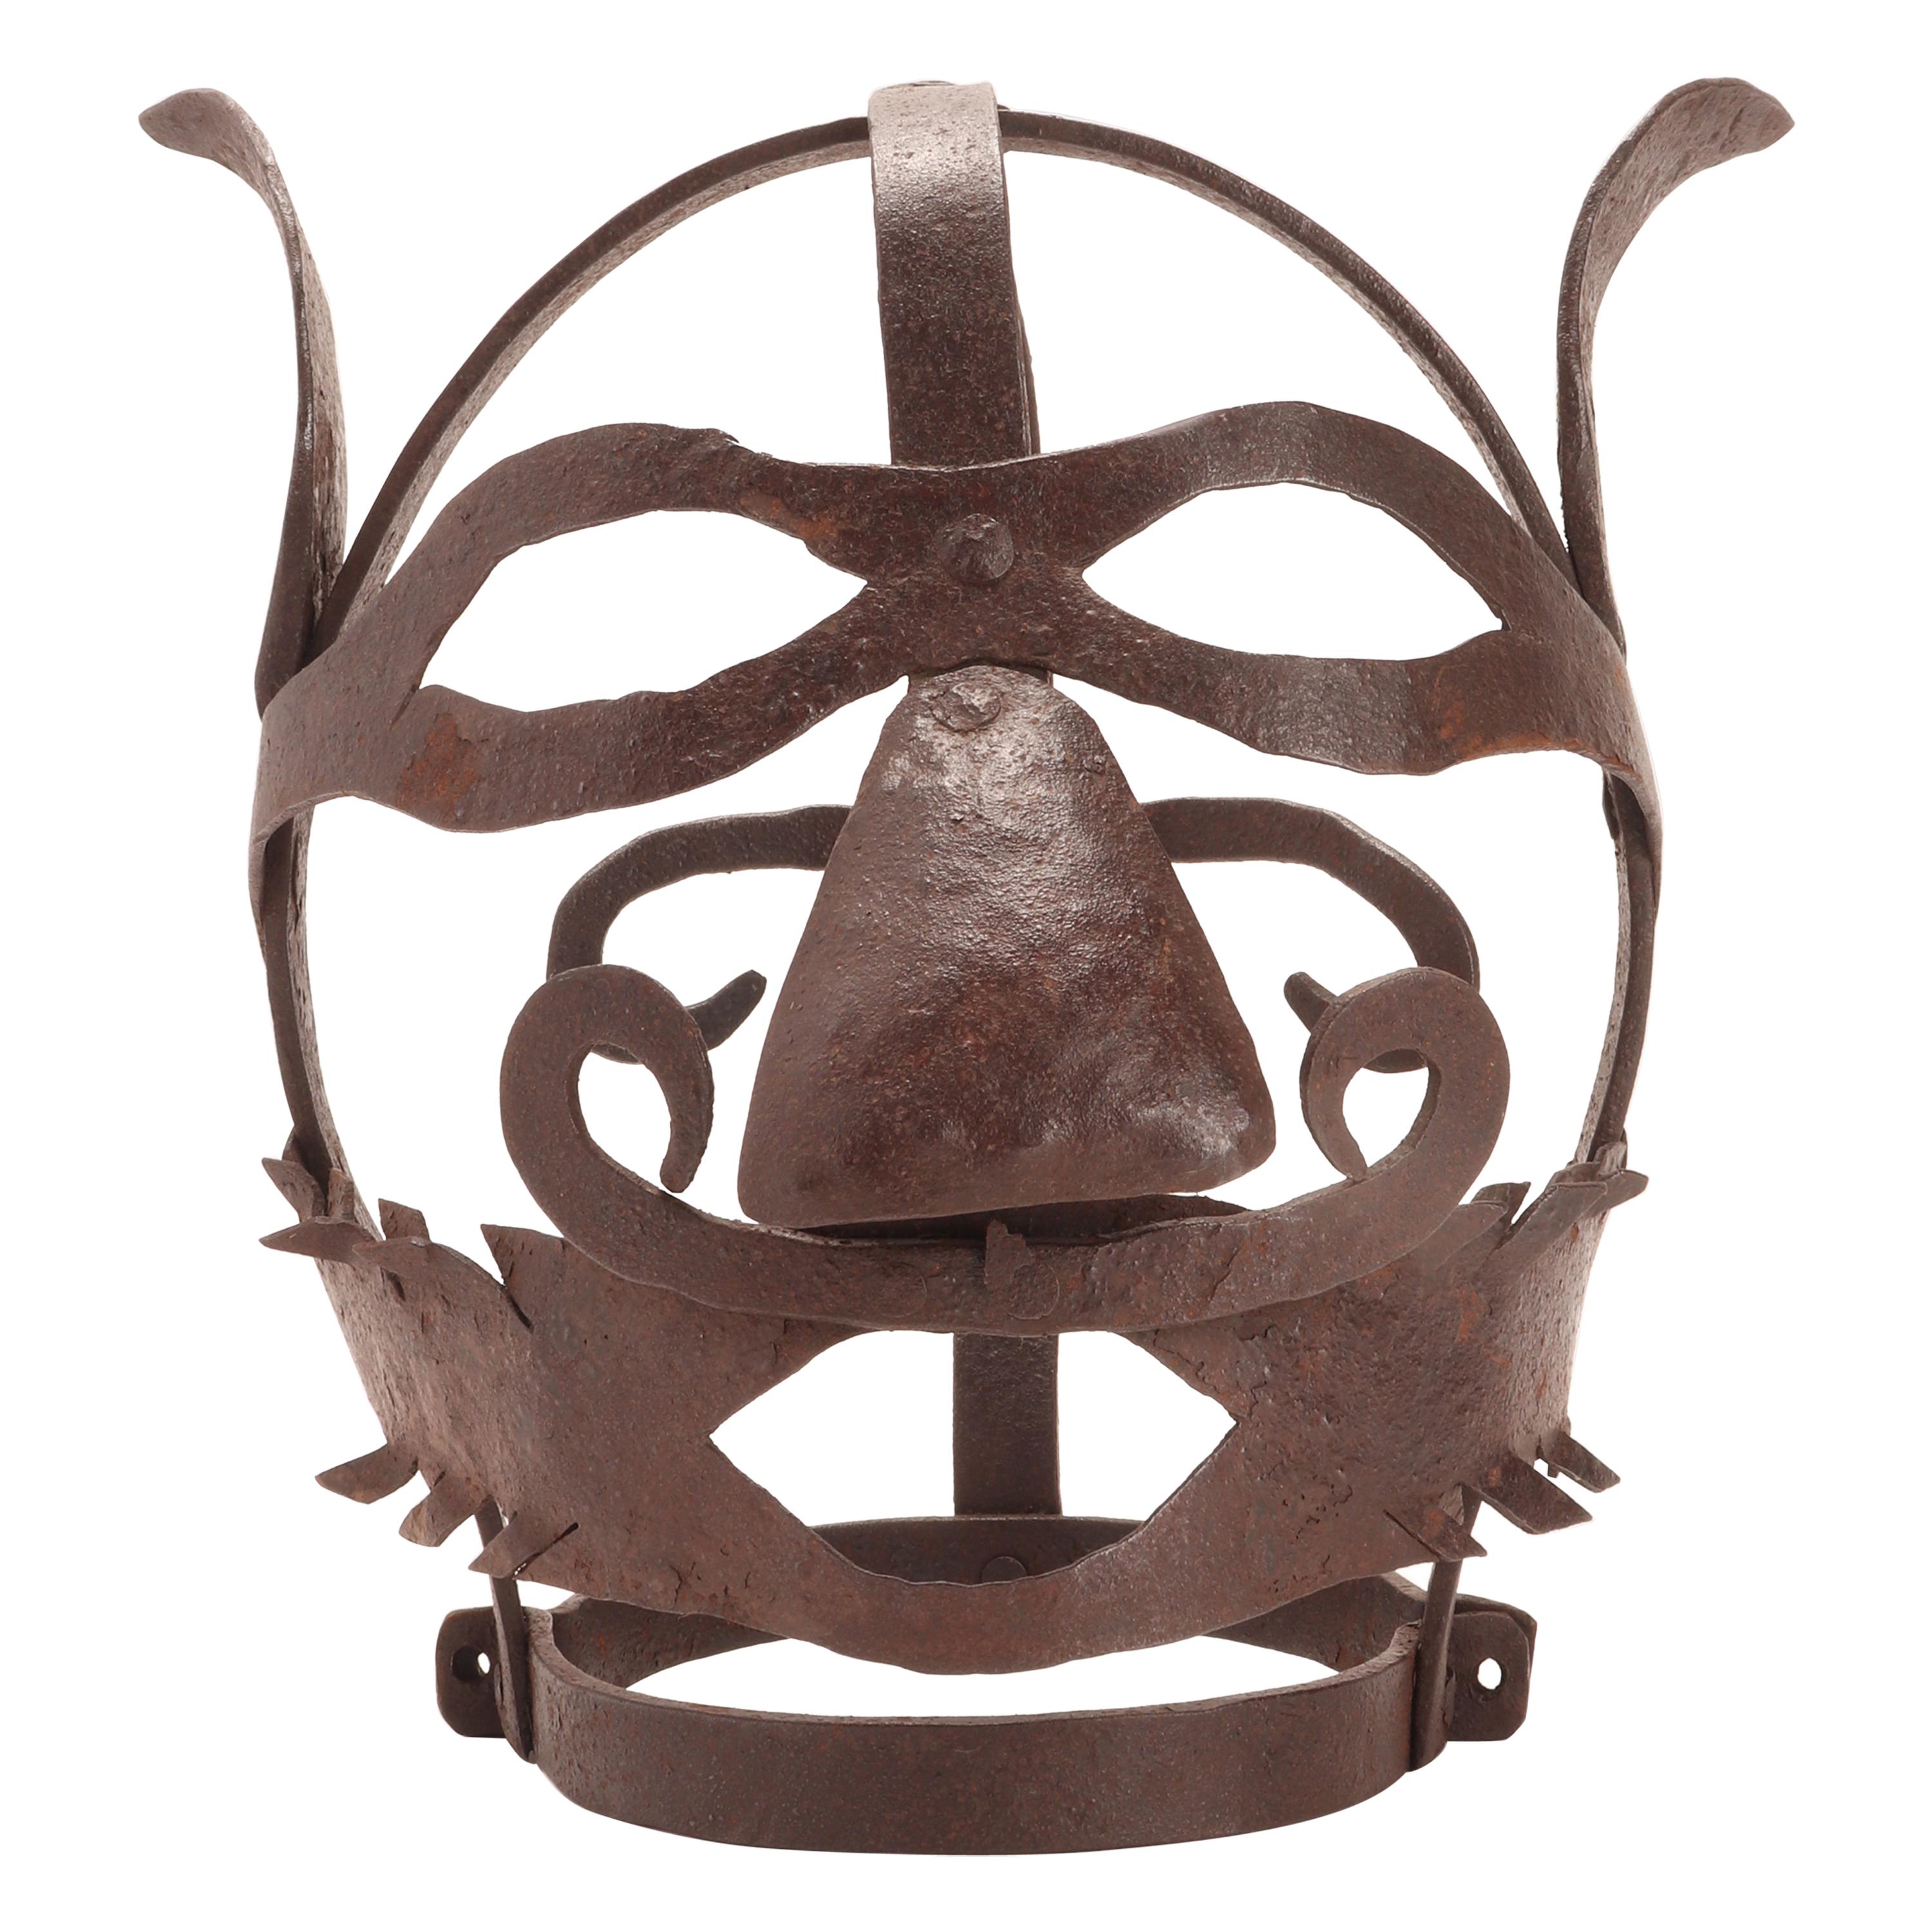 Scold’s Bridle Metal Mask, United Kingdom, 1700